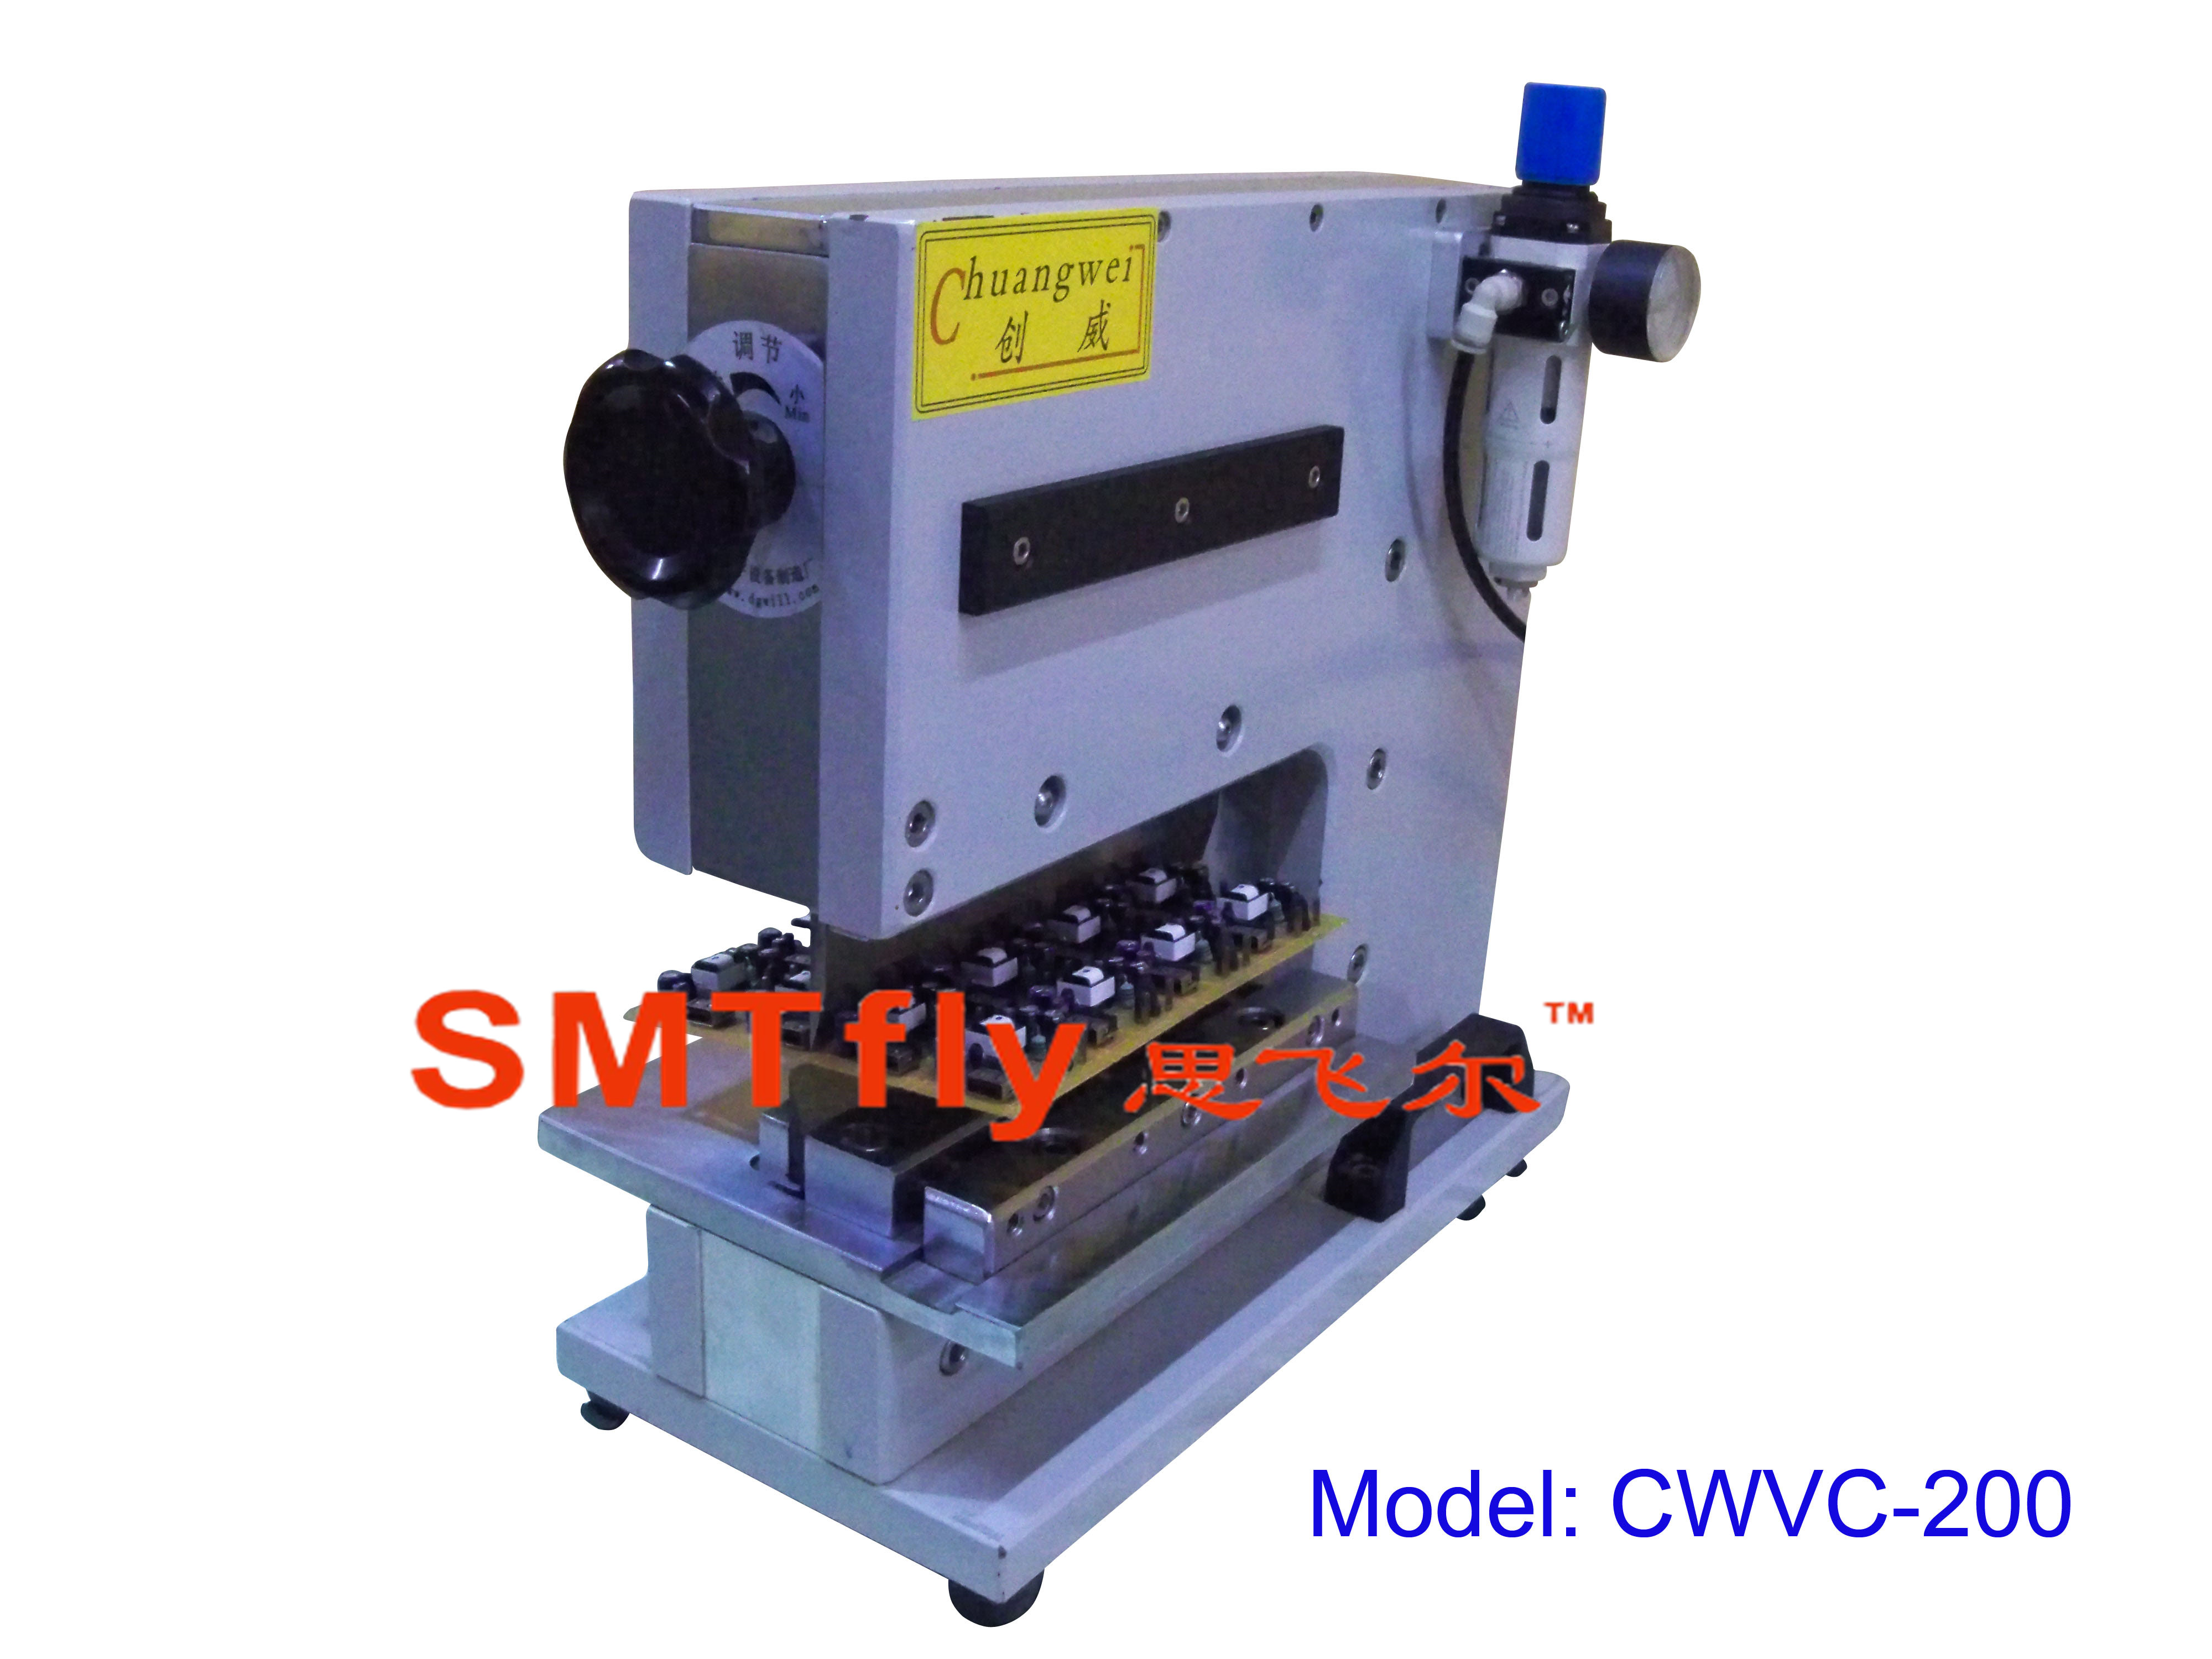 PCB Guillotine Equipment,SMTfly-200J